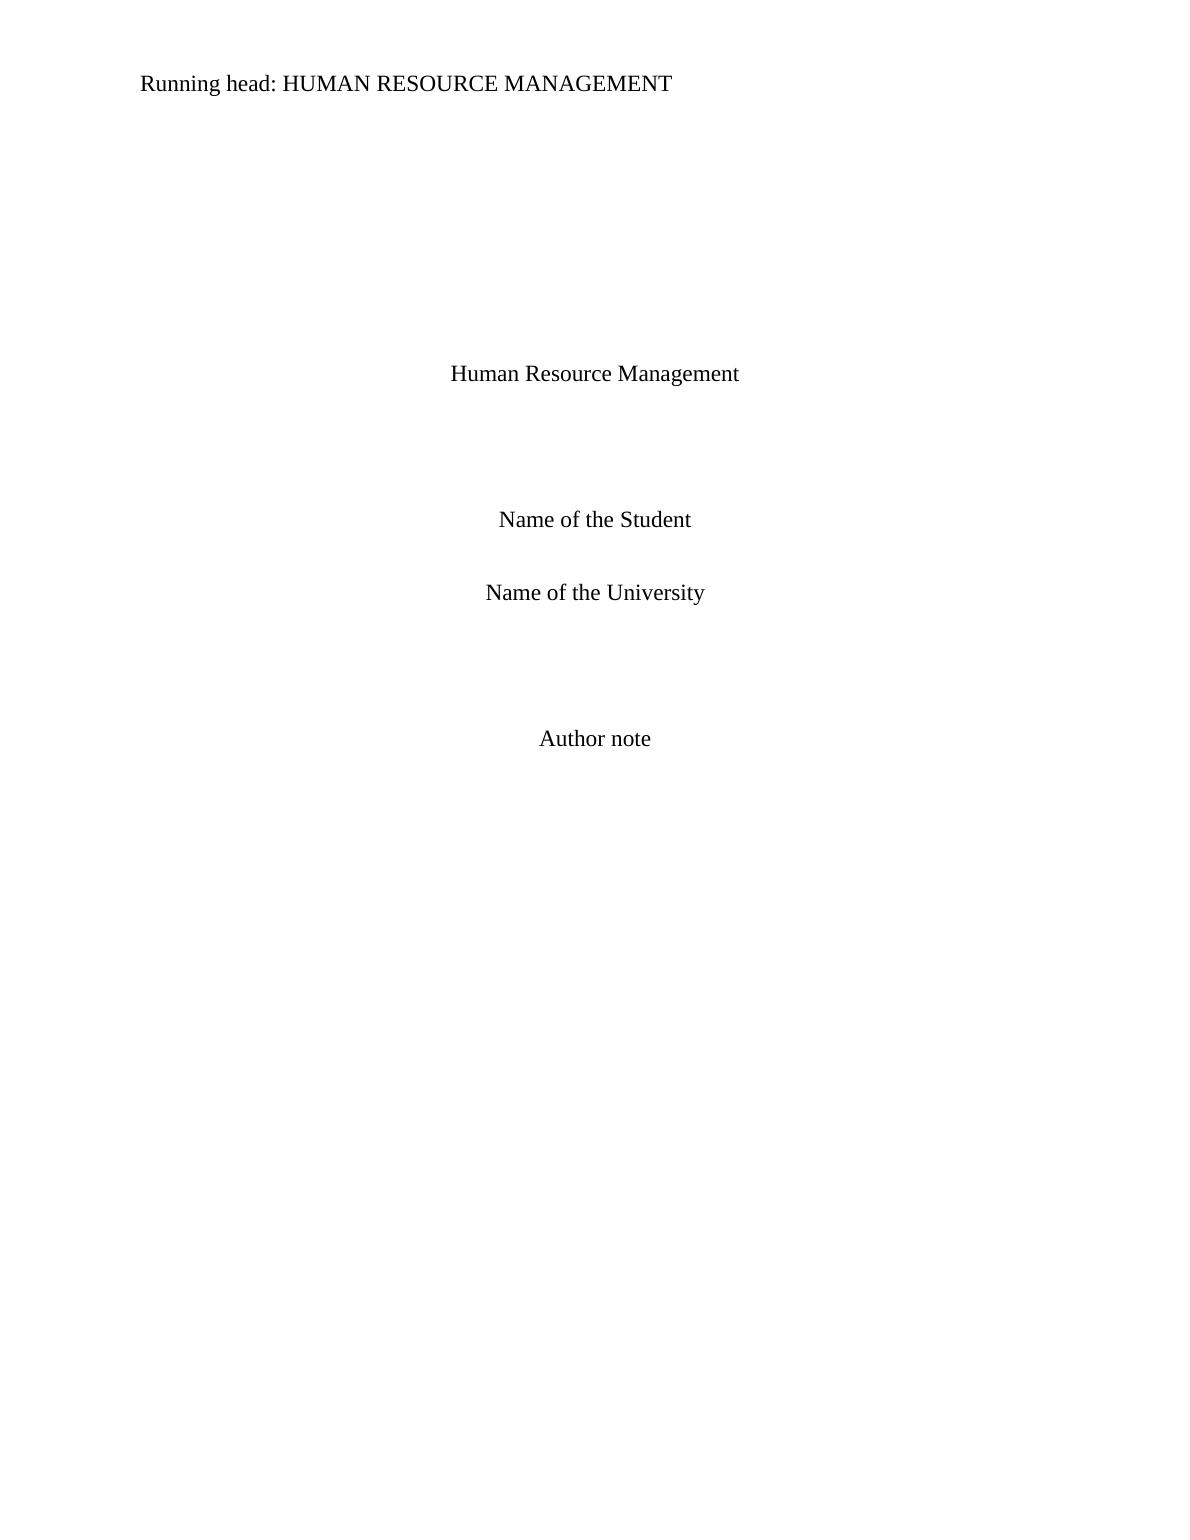 Strategic Human Resource Management - Essay_1